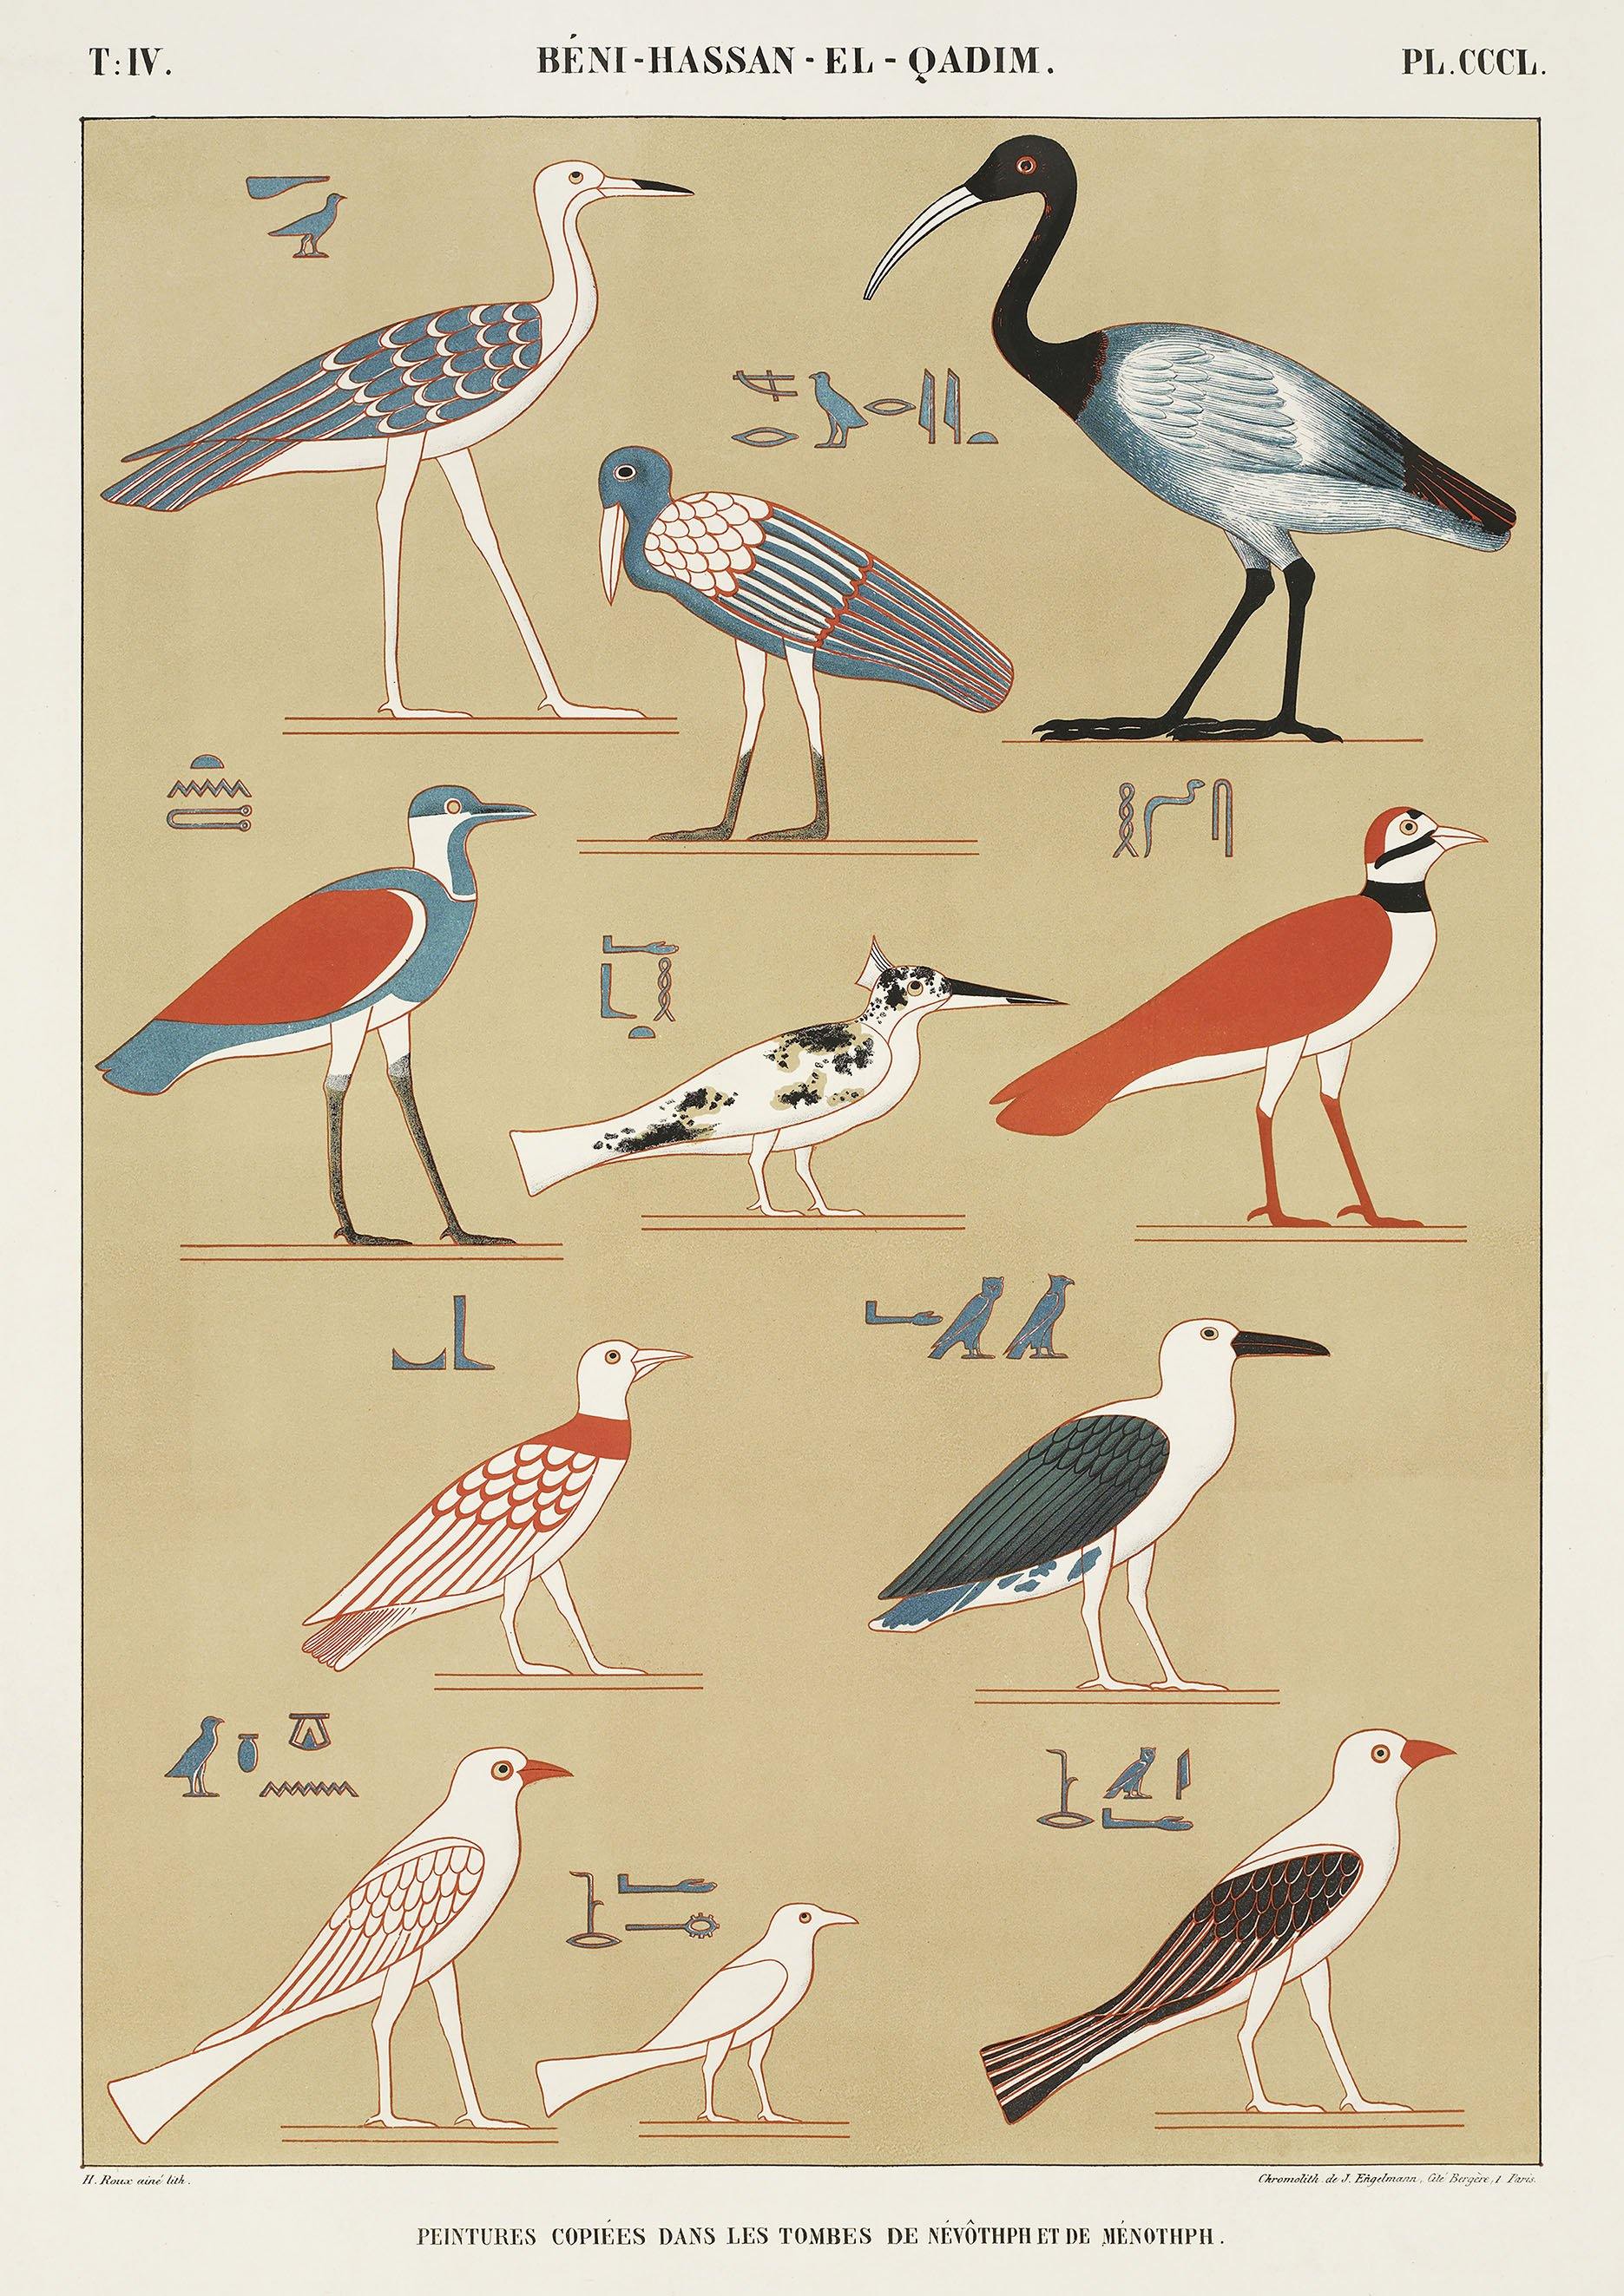 EGYPTIAN BIRDS PRINTS: Vintage Bird Types Art Illustrations - Pimlico Prints